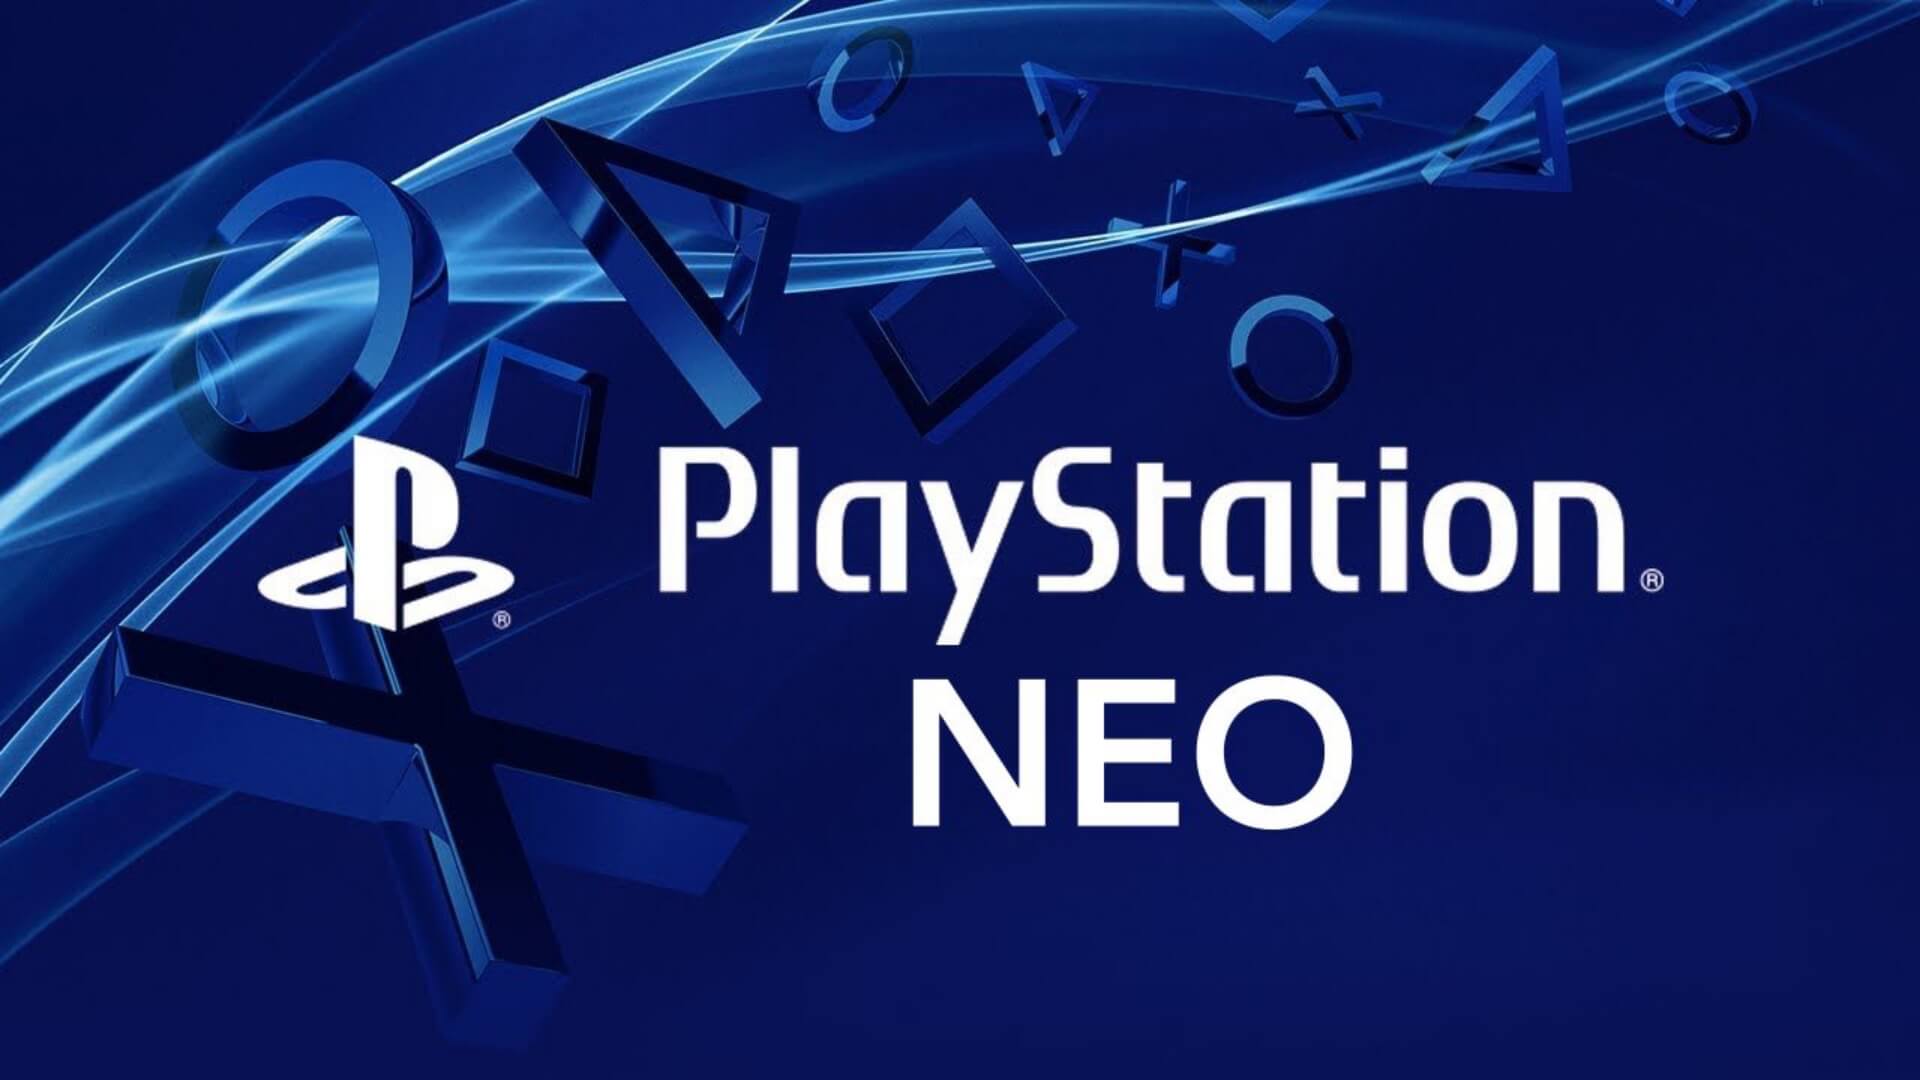 PlayStation Neo